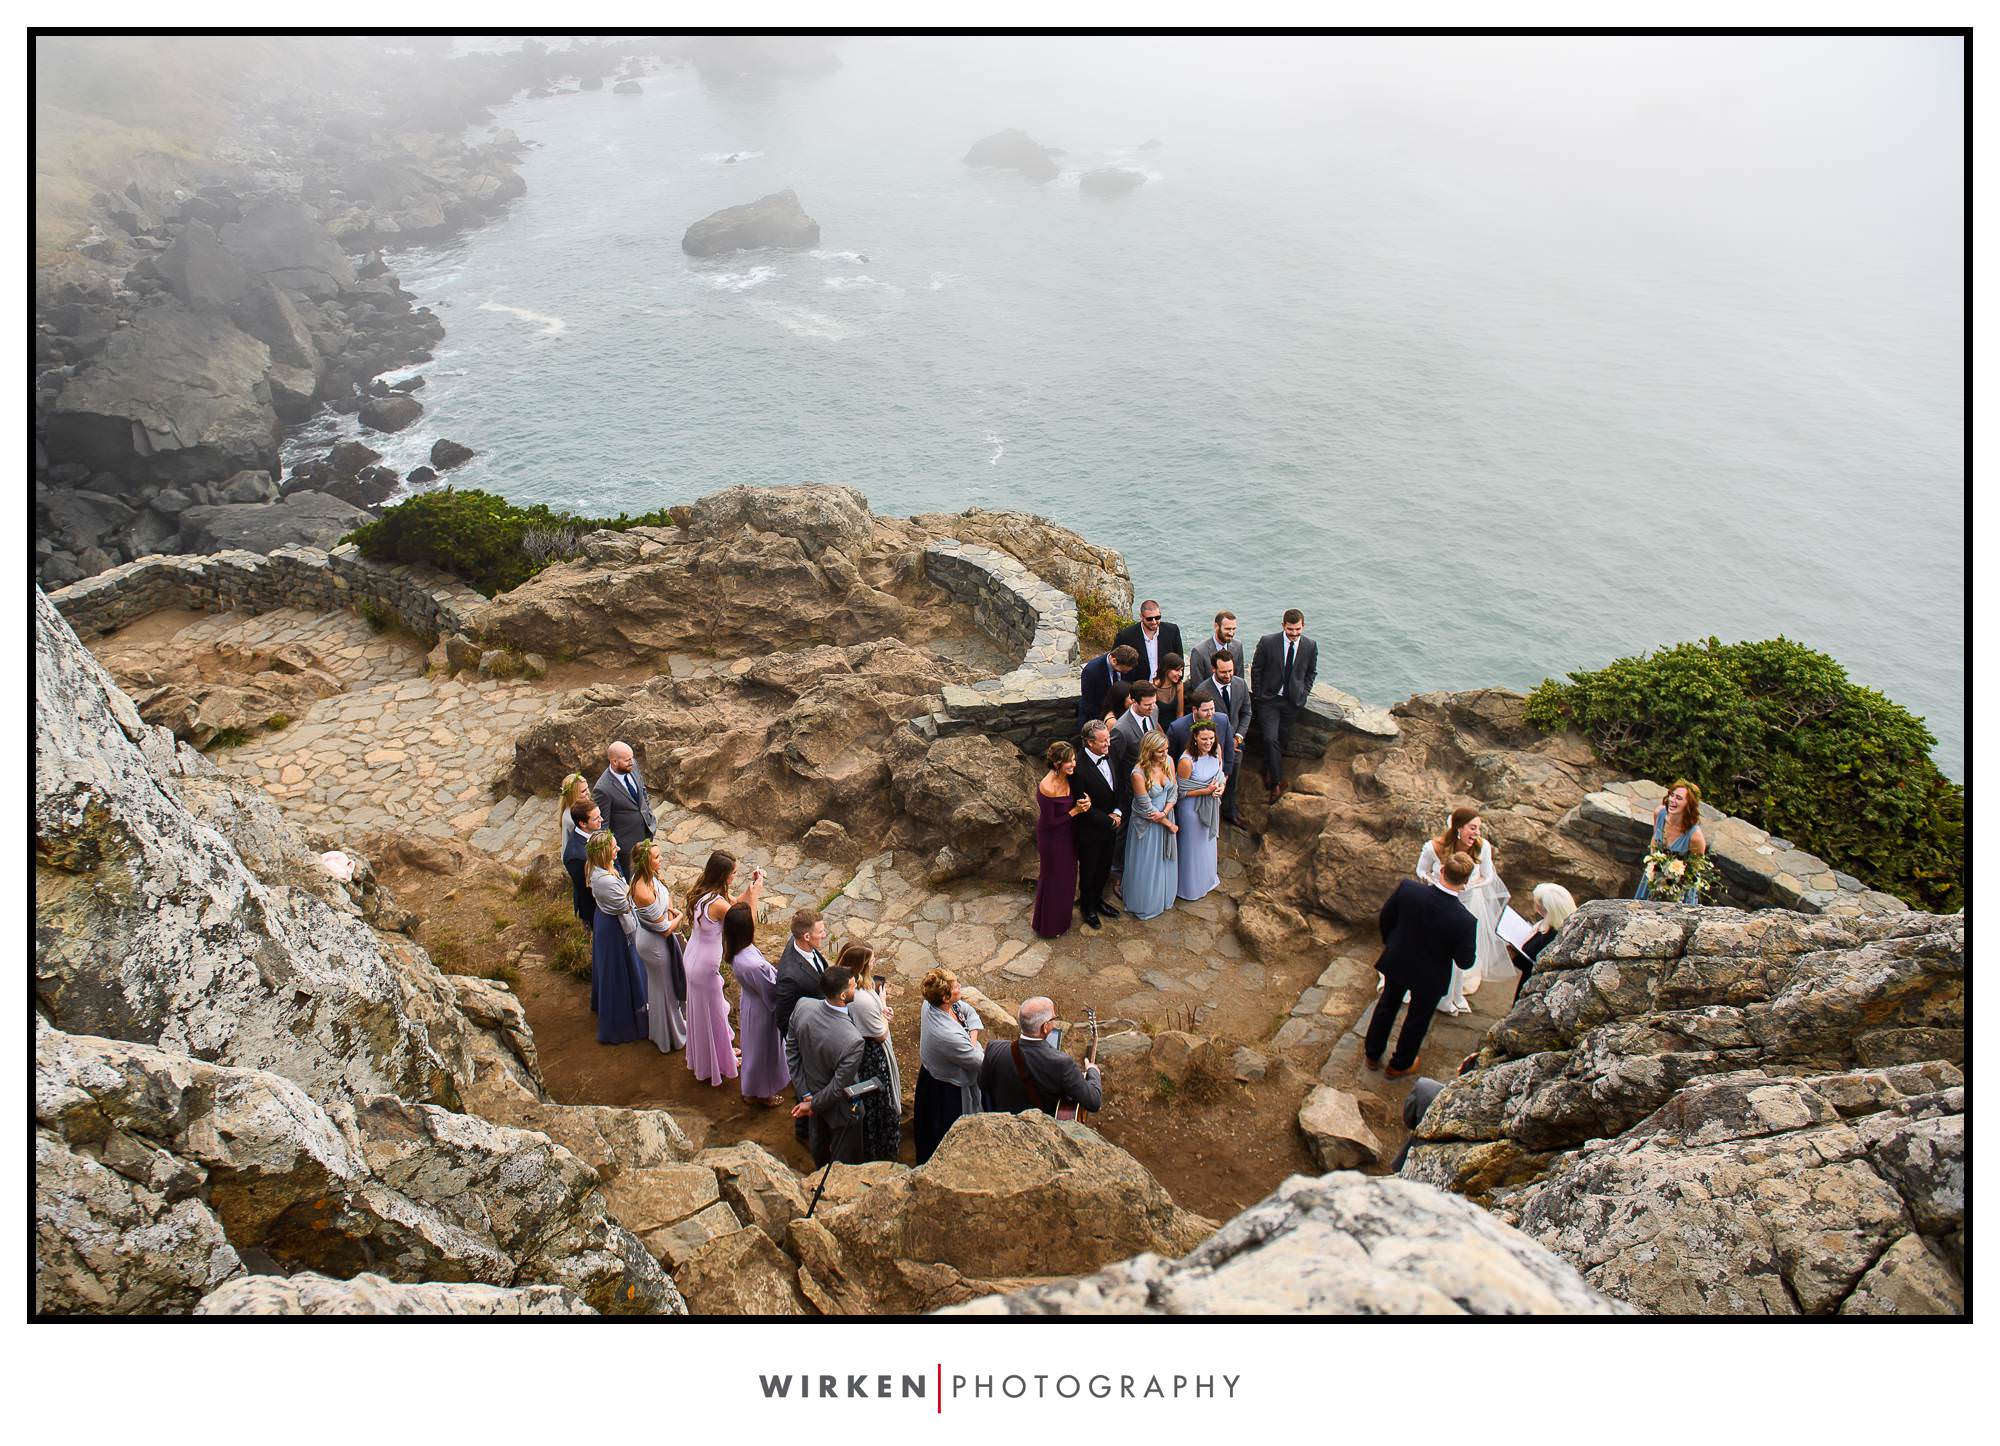 Patrick's Point Park wedding ceremony on Wedding Rock